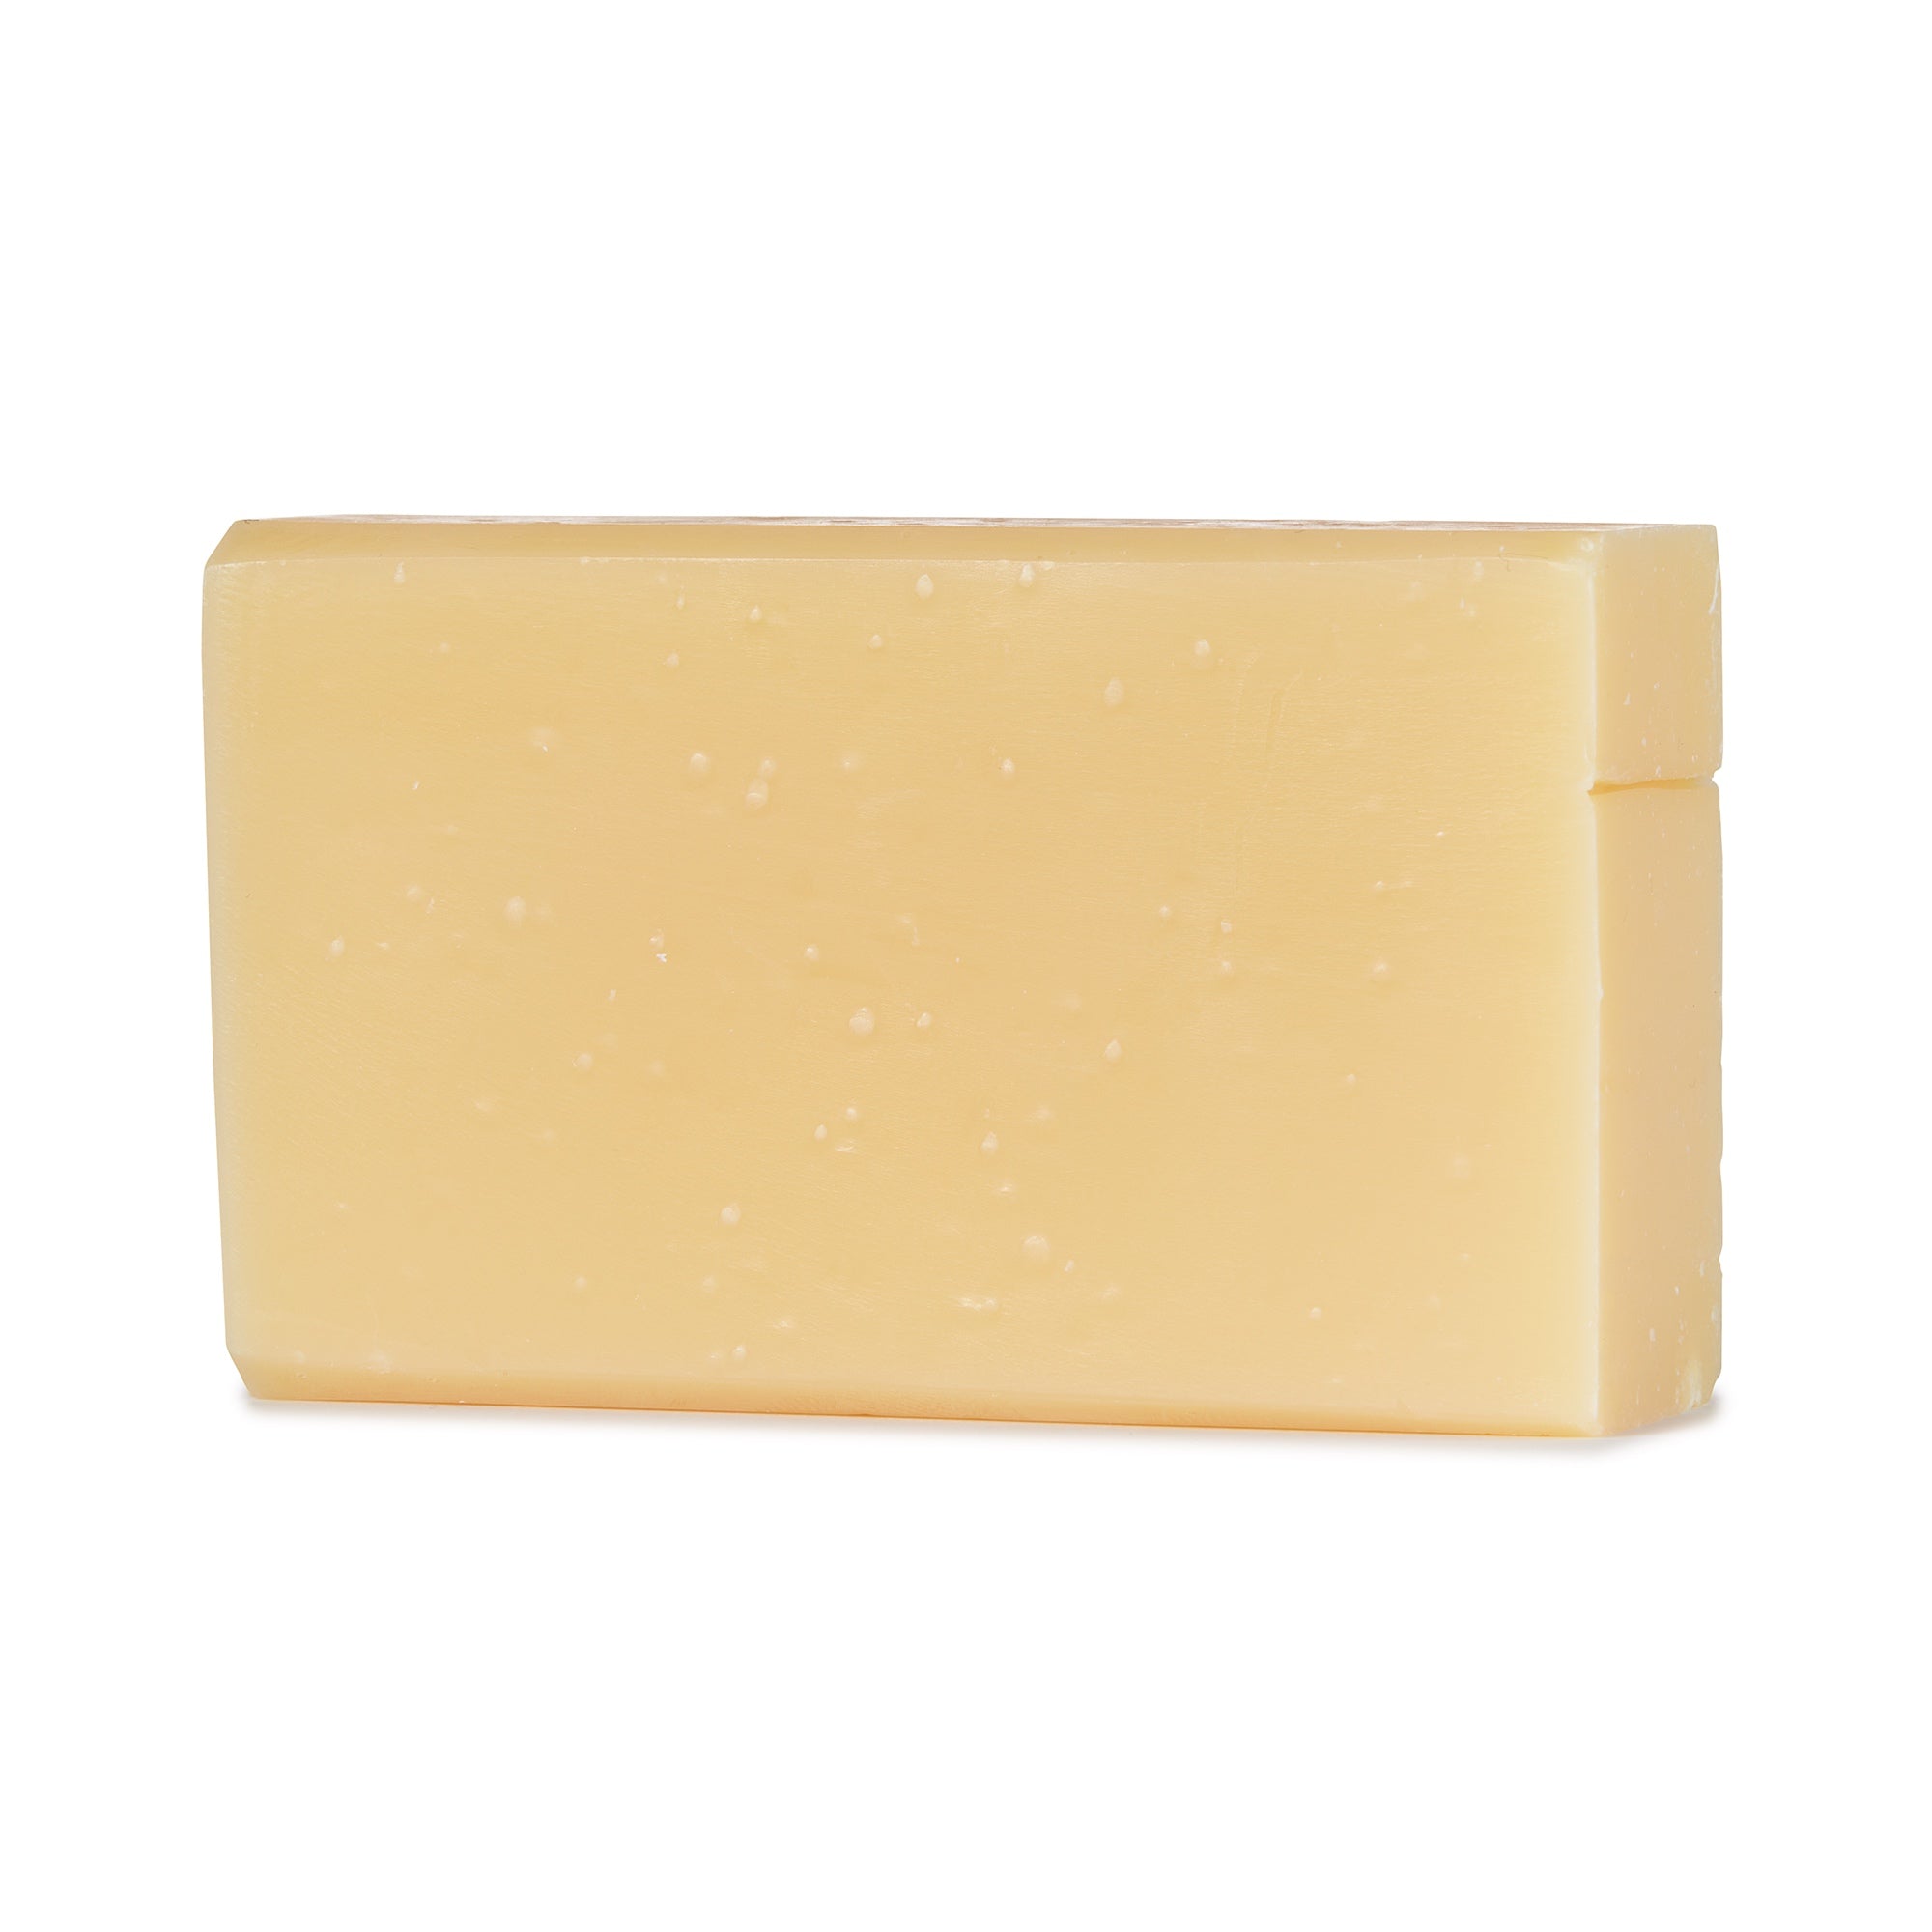 Image of Antü Refreshing bar of soap.